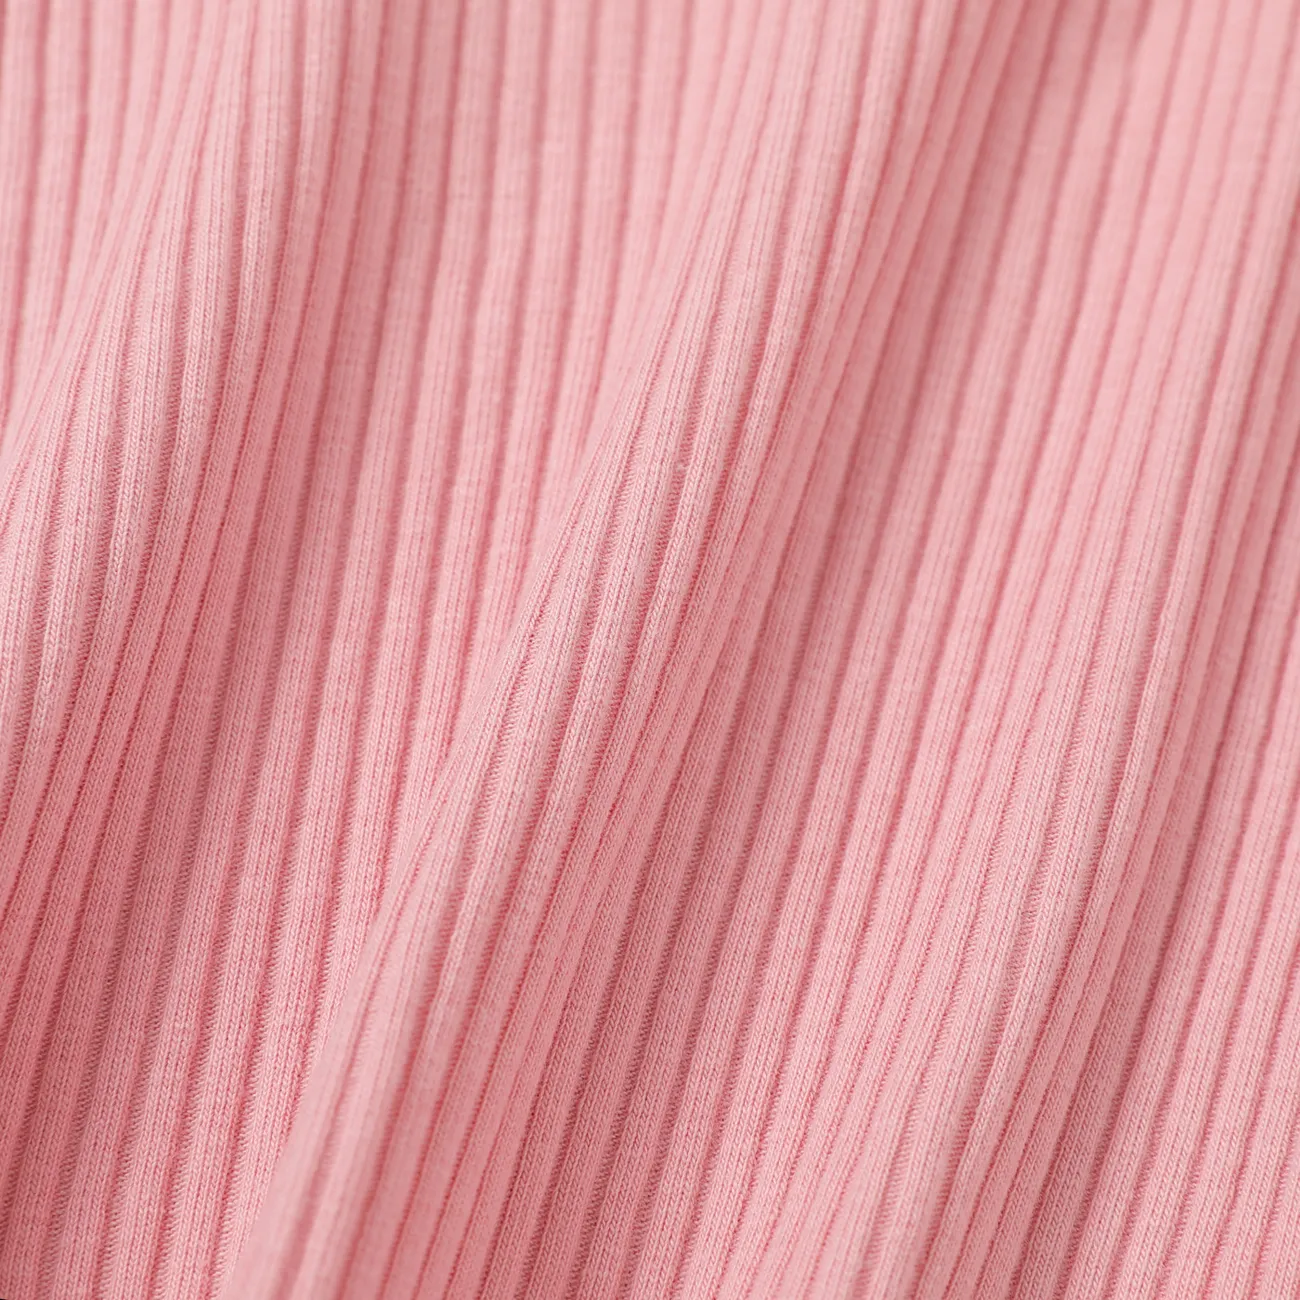 Baby Mädchen Flatterärmel Basics Kurzärmelig T-Shirts rosa big image 1